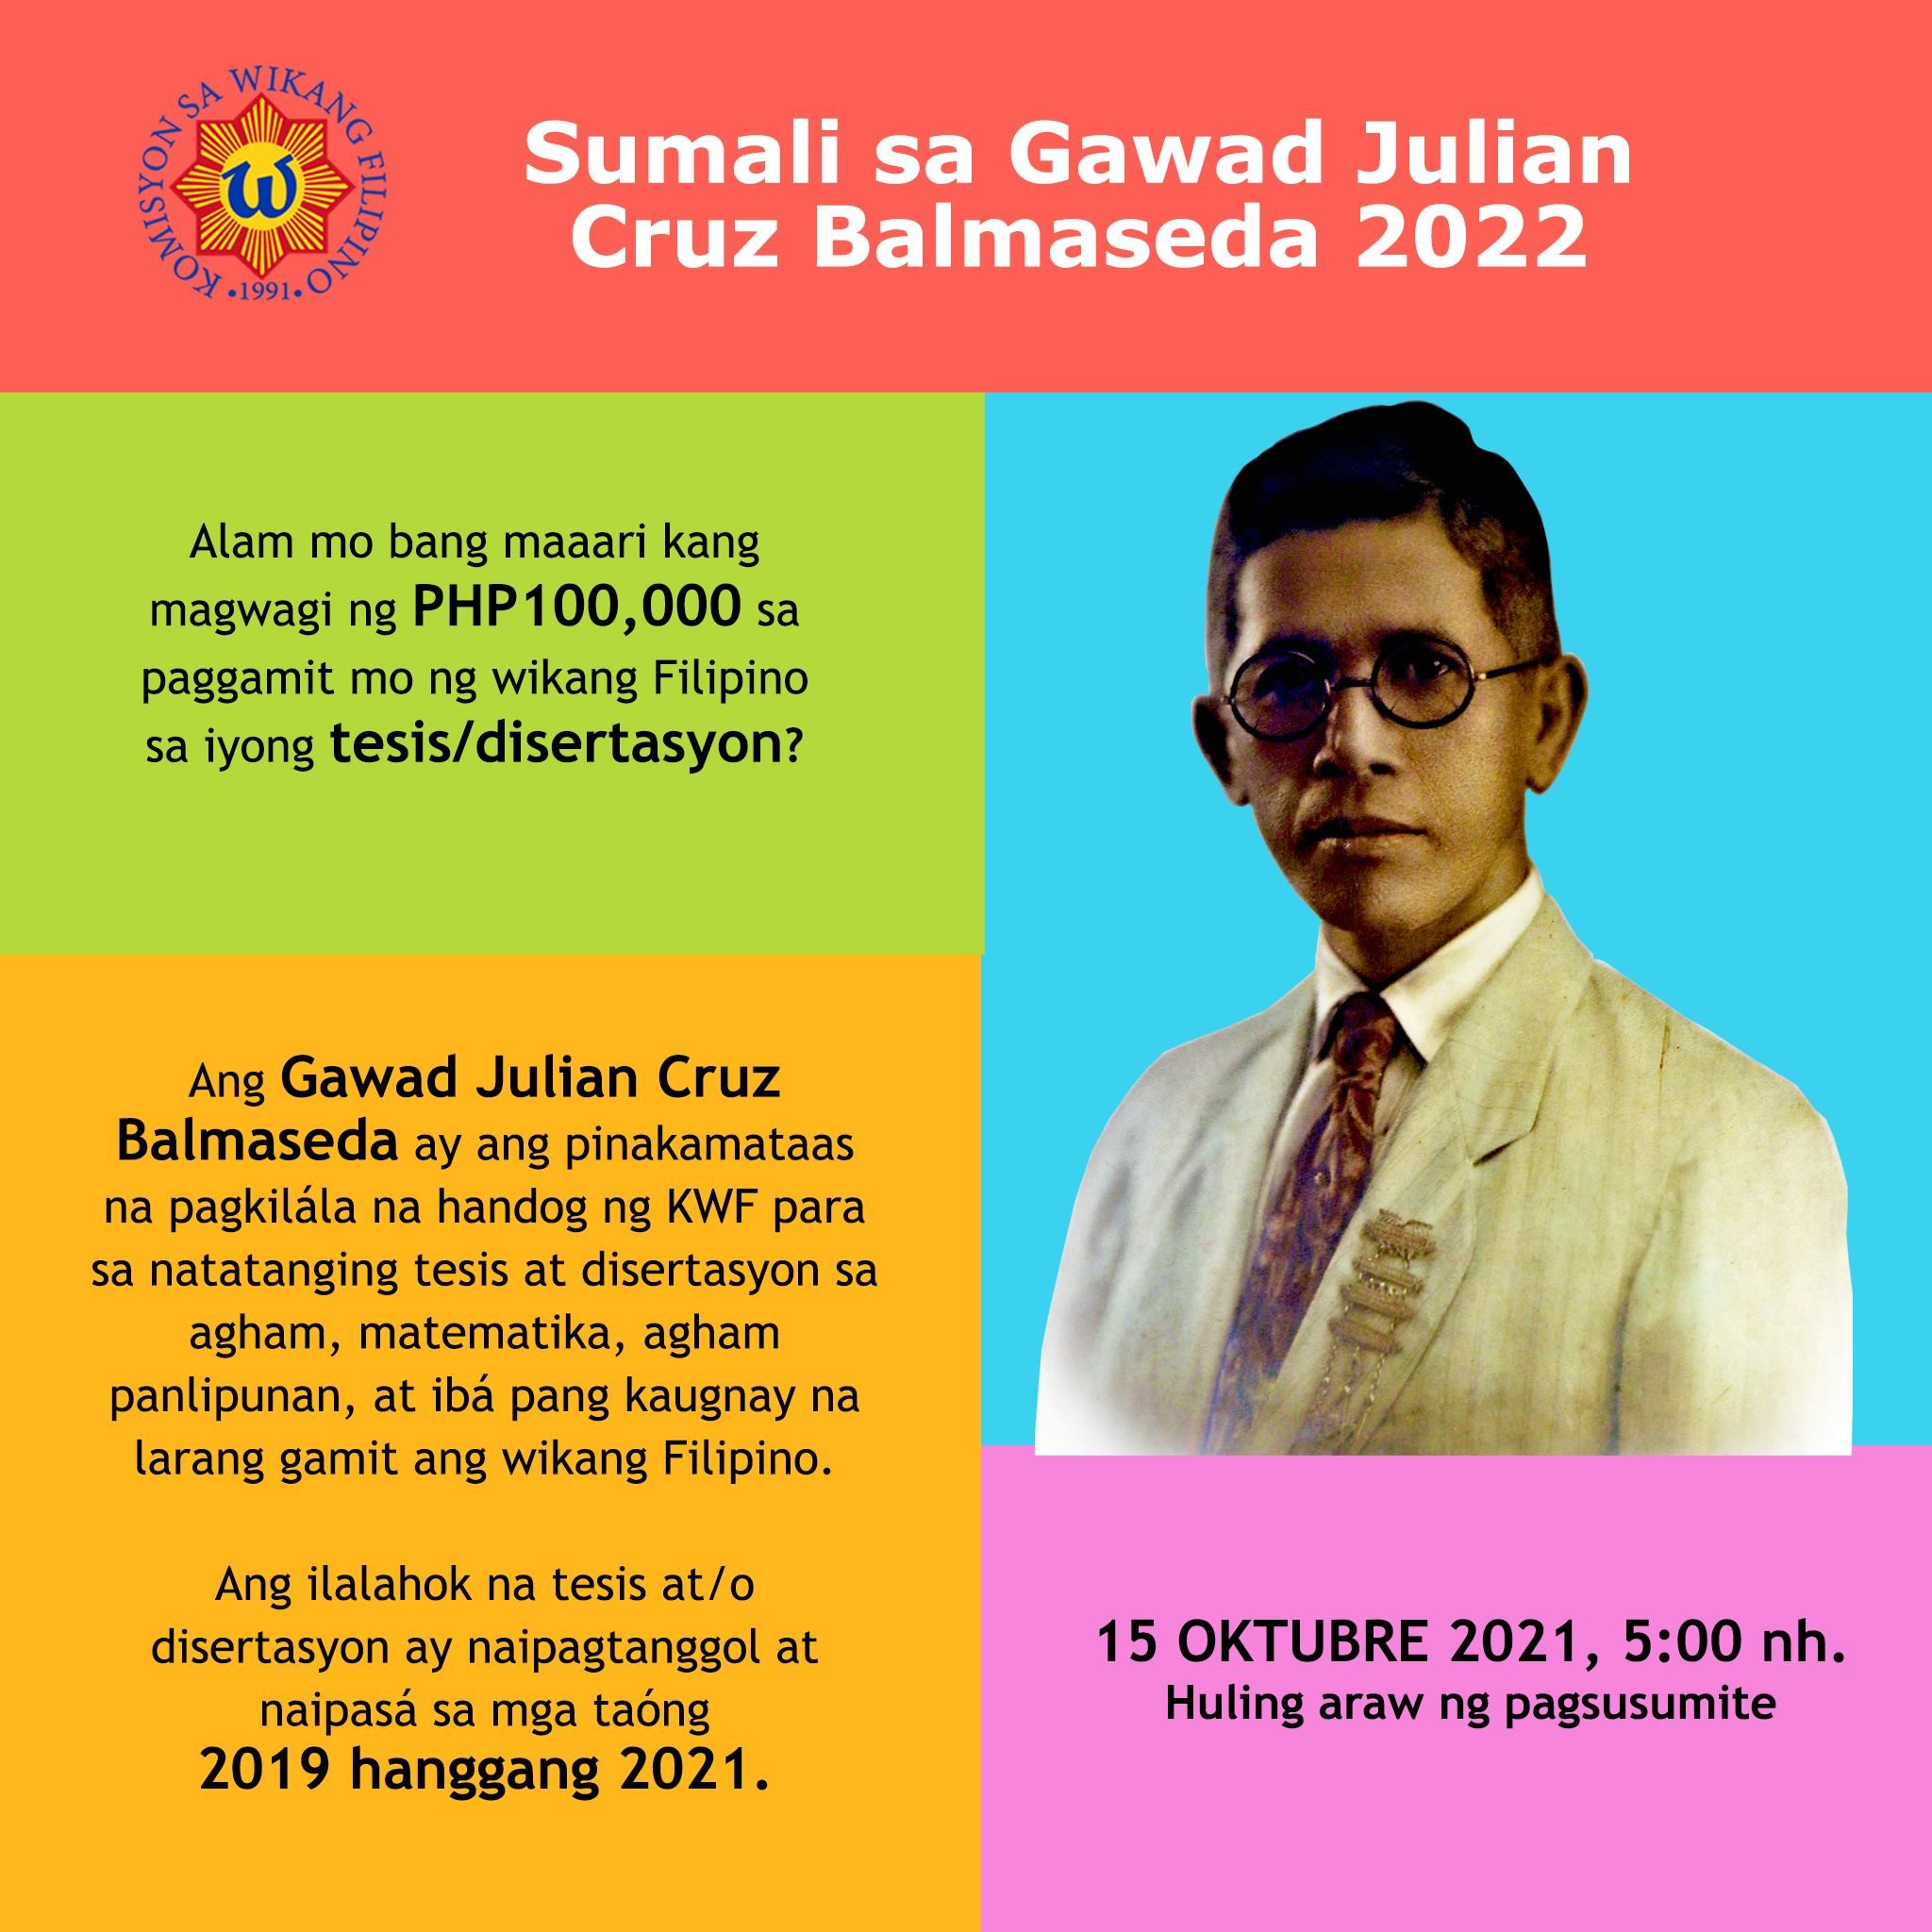 Sumali sa Gawad Julian Cruz Balmaseda 2022